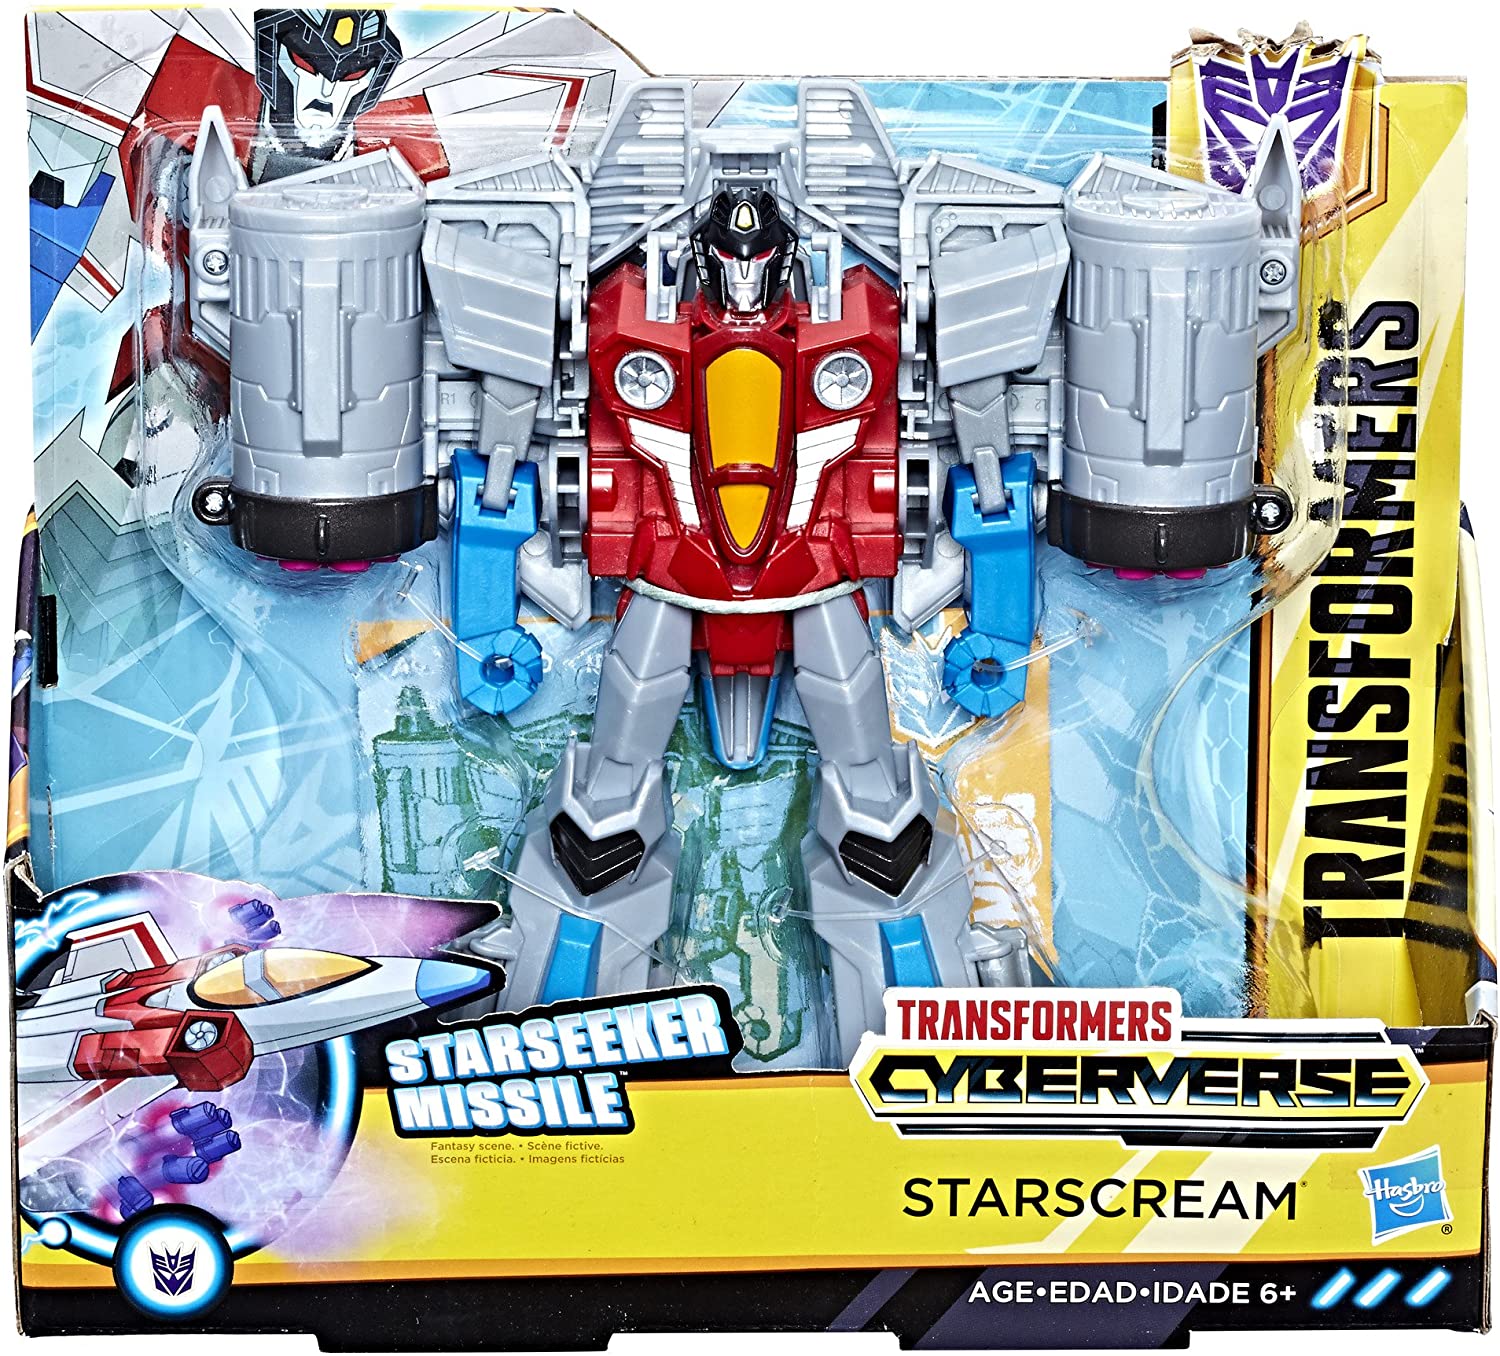 Transformers Cyberverse Starscream action figure